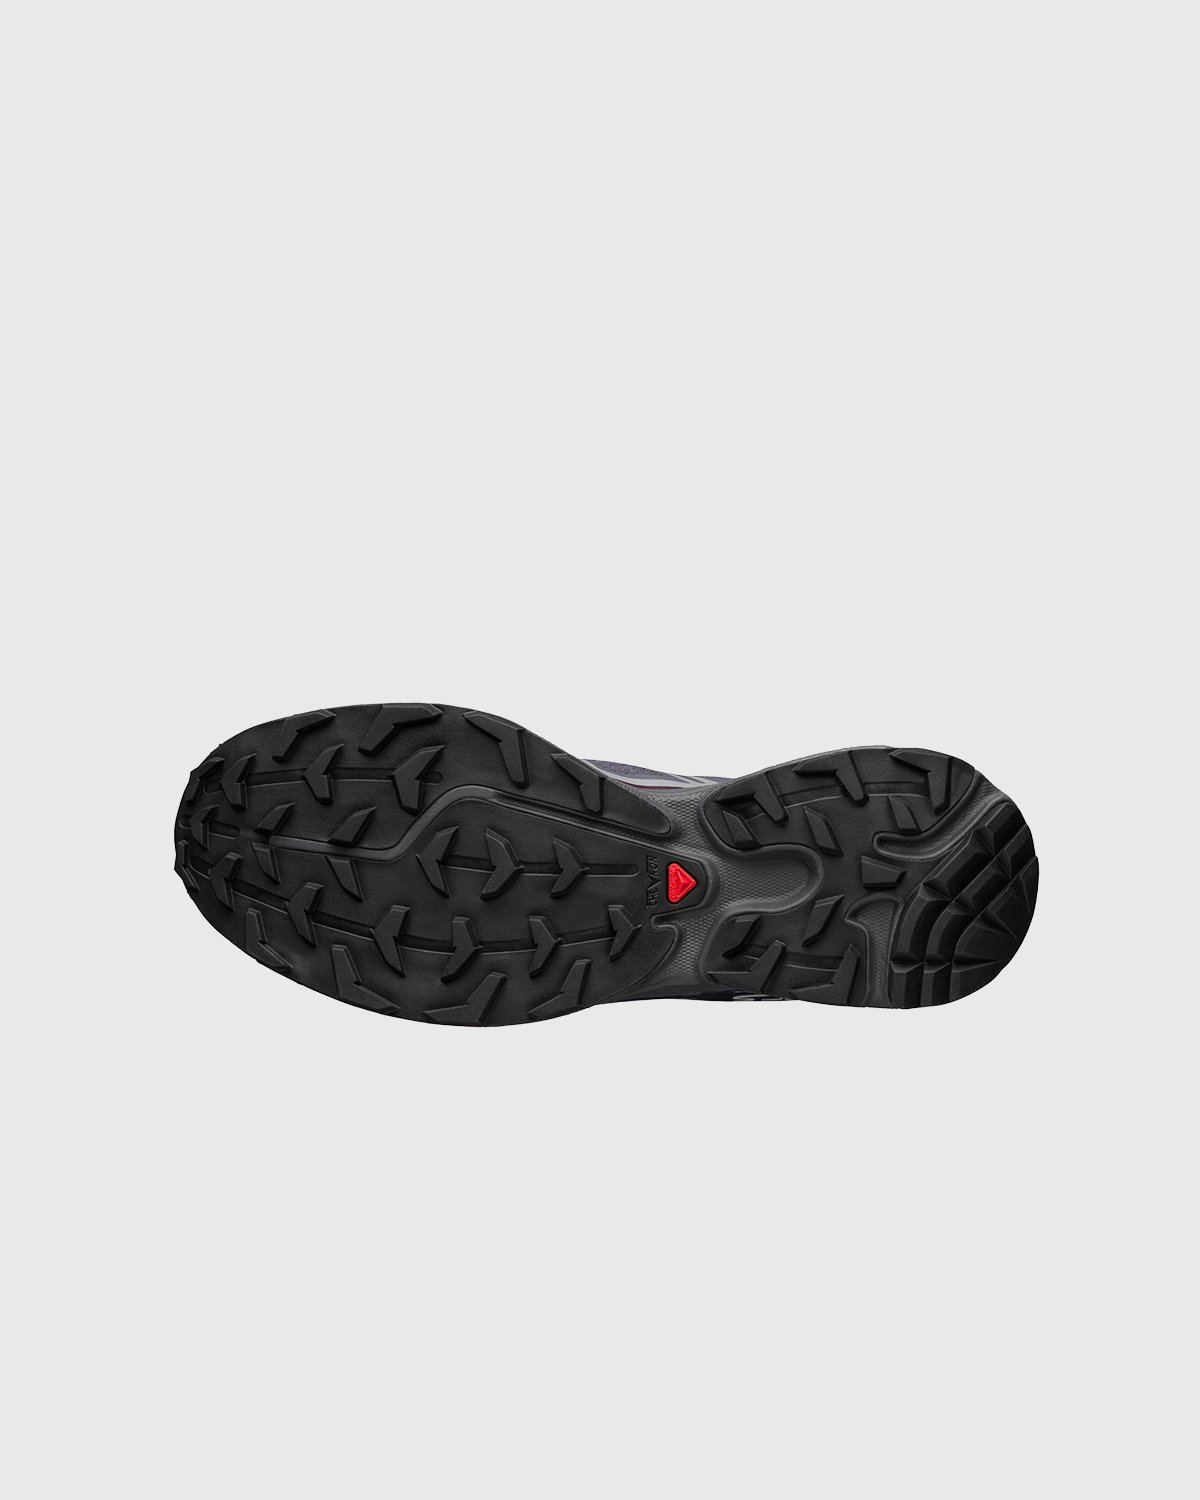 Salomon - XT-6 Advanced Ebony - Footwear - Black - Image 5